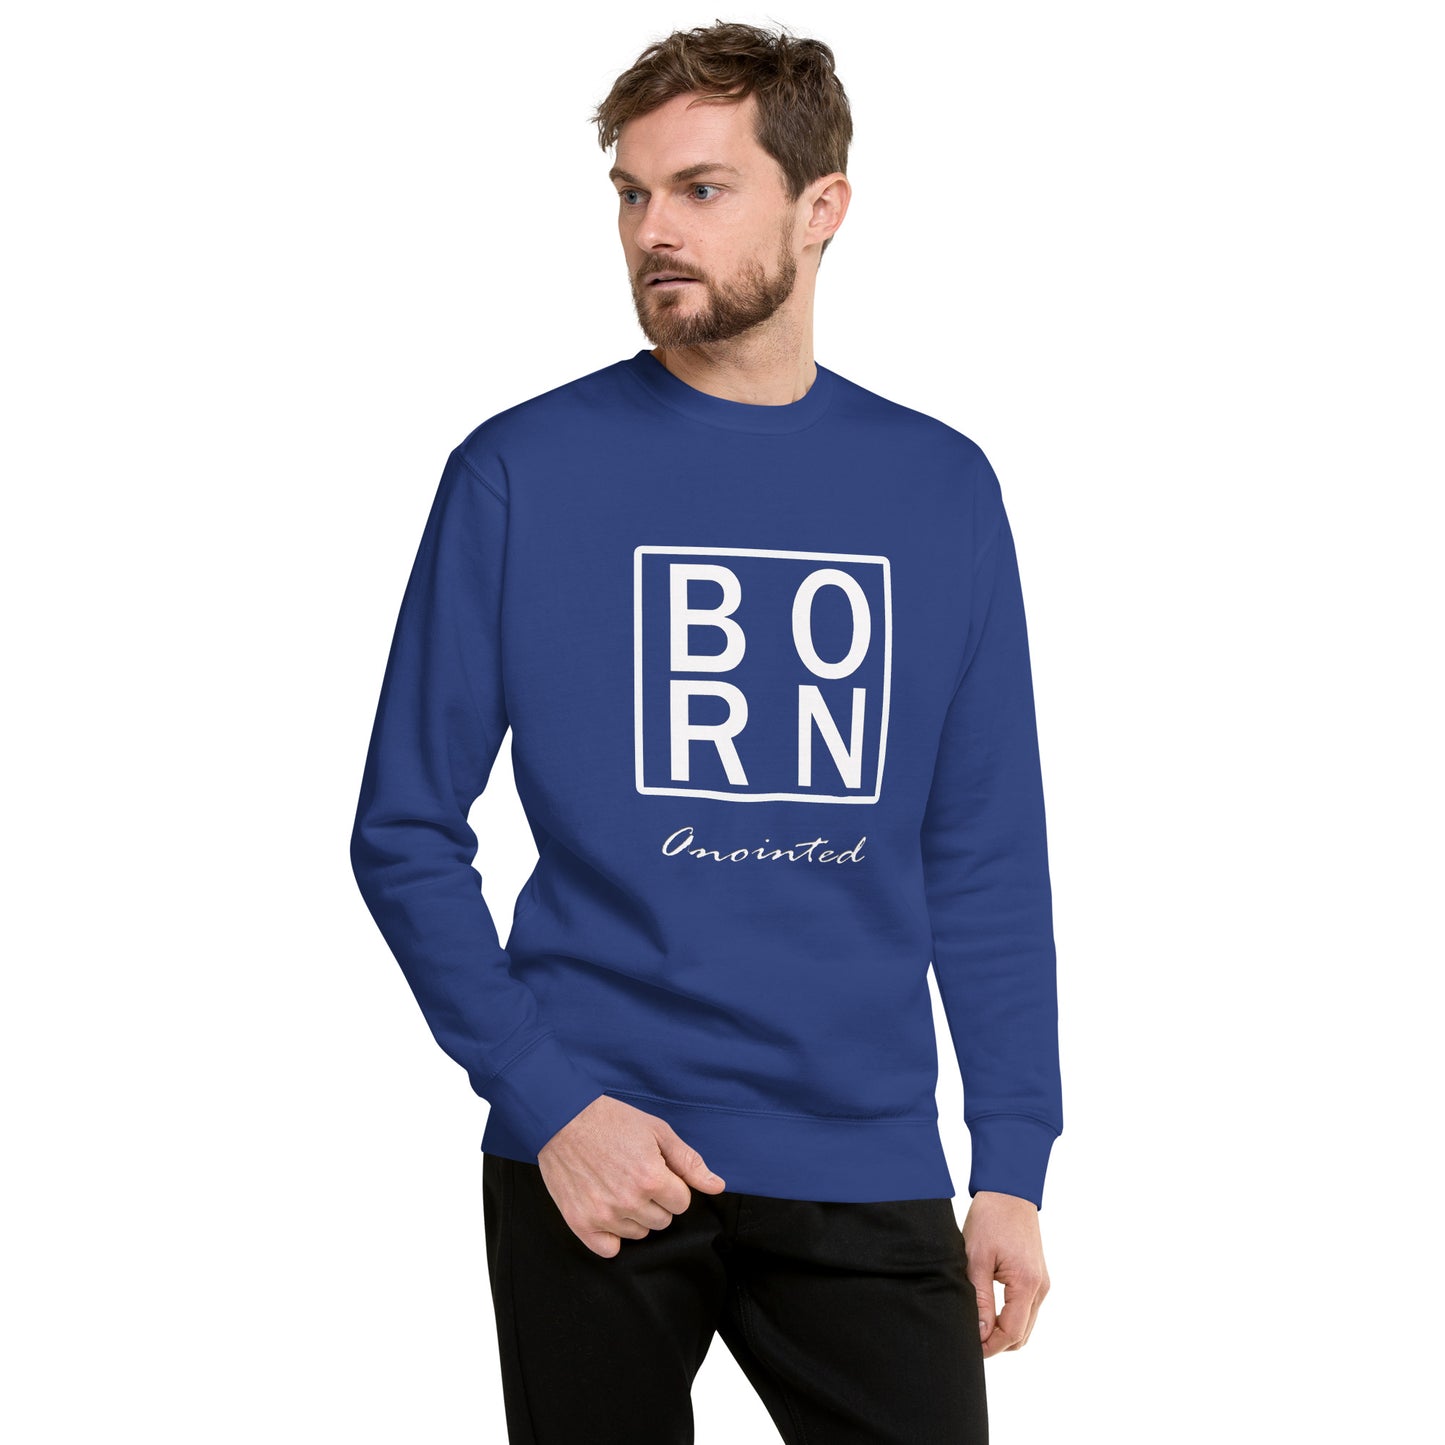 Born Anointed "Classic Looo" Wht Unisex Premium Sweatshirt